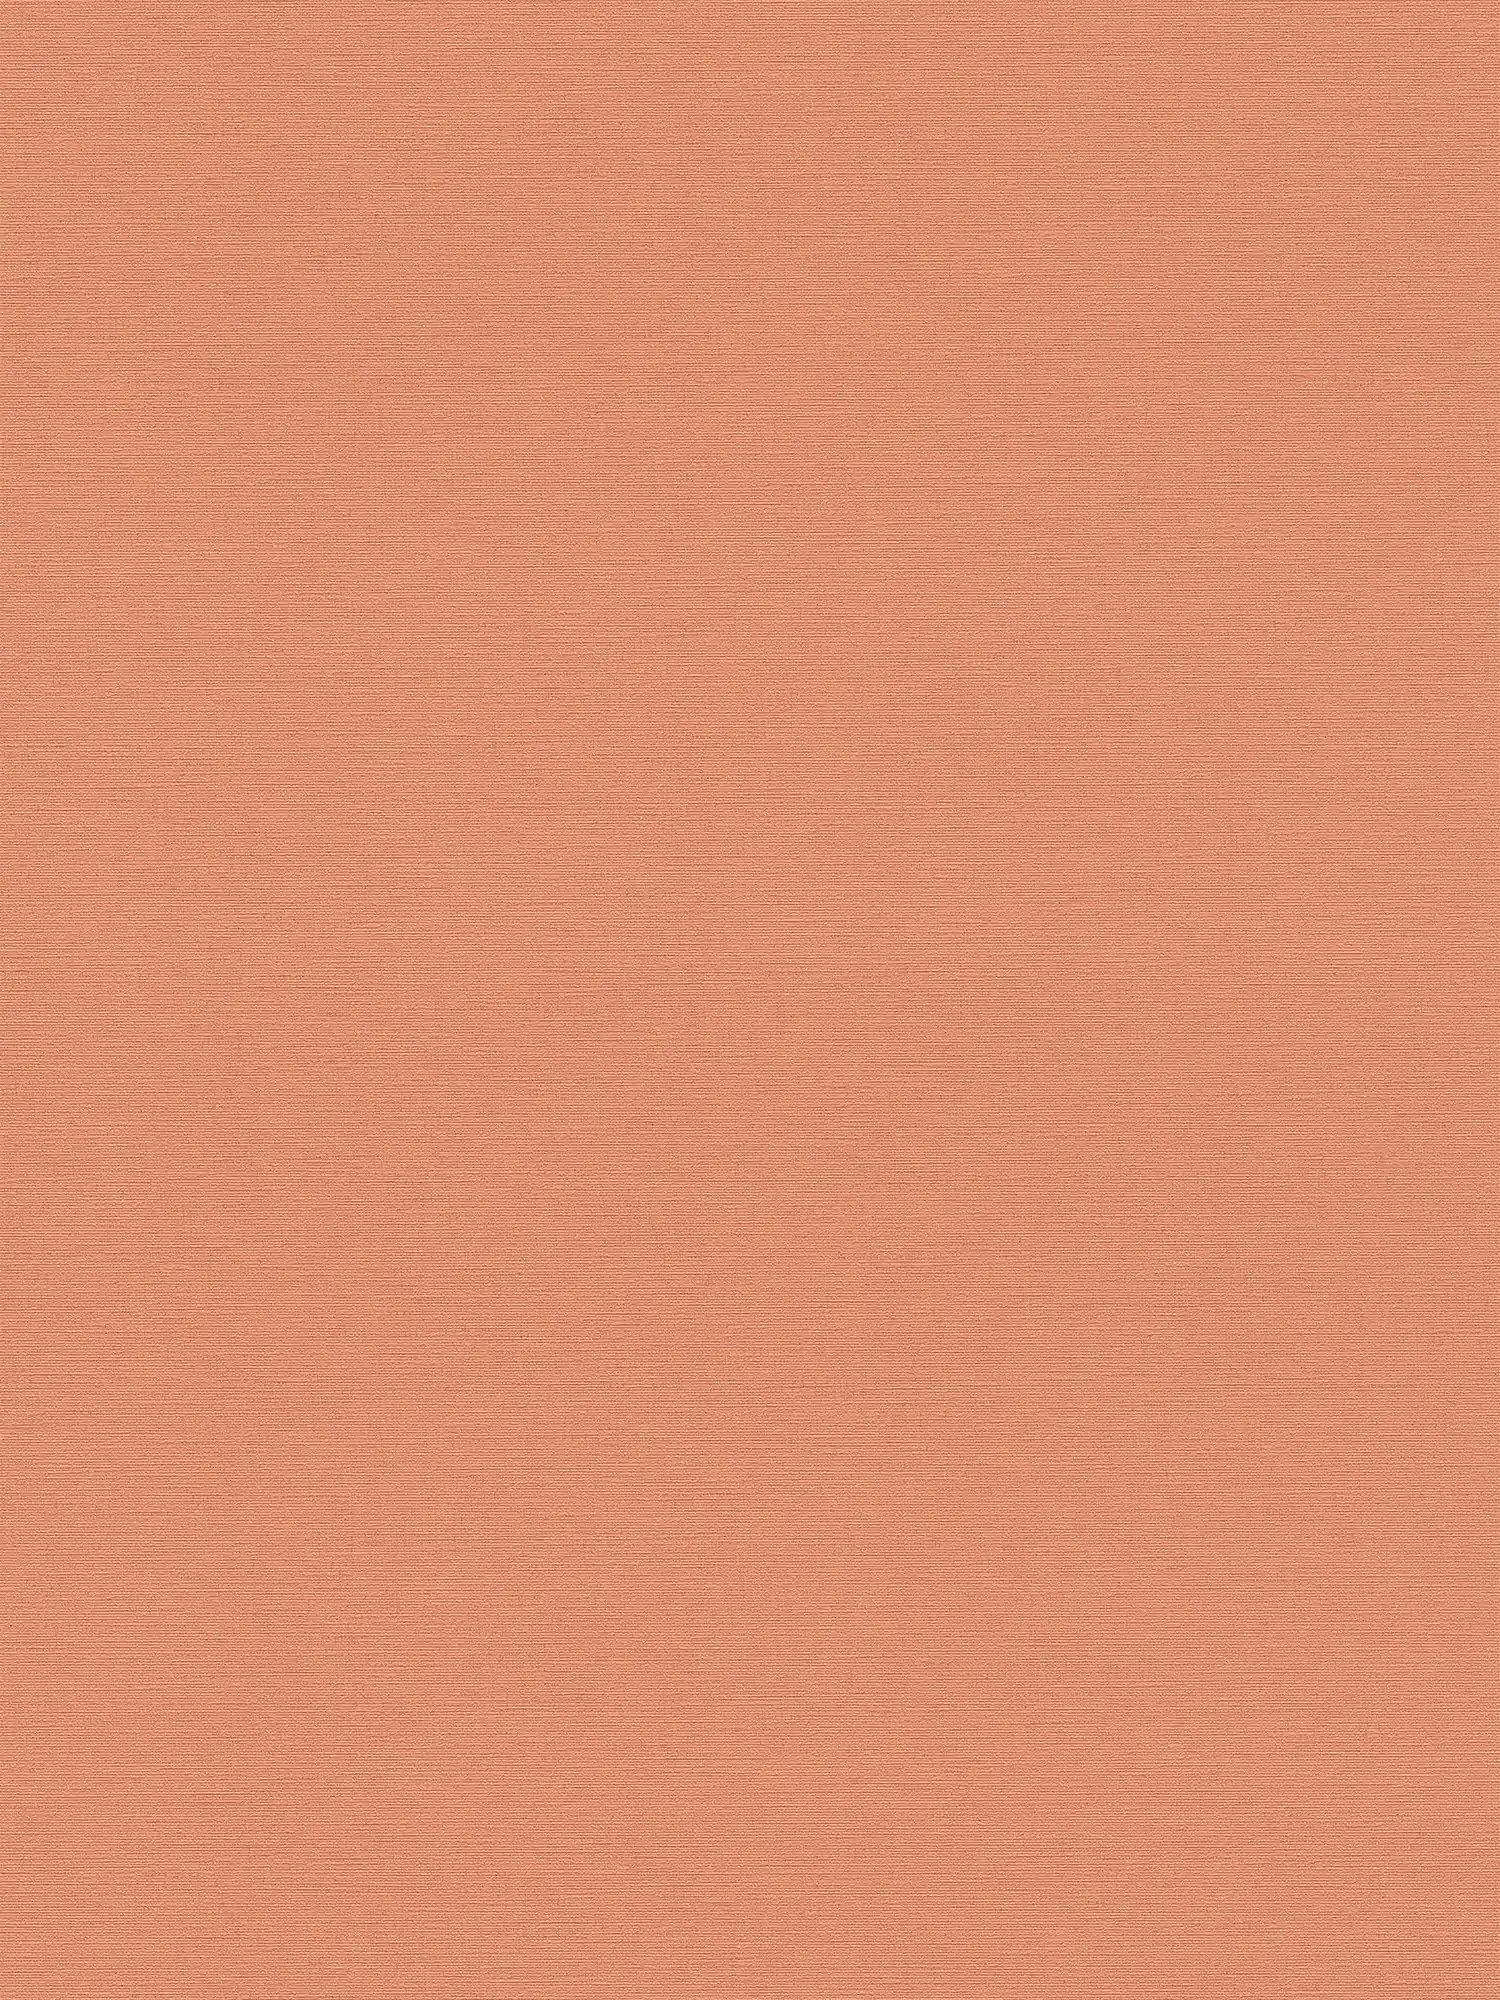 Papier peint imitation lin, style discret - orange
